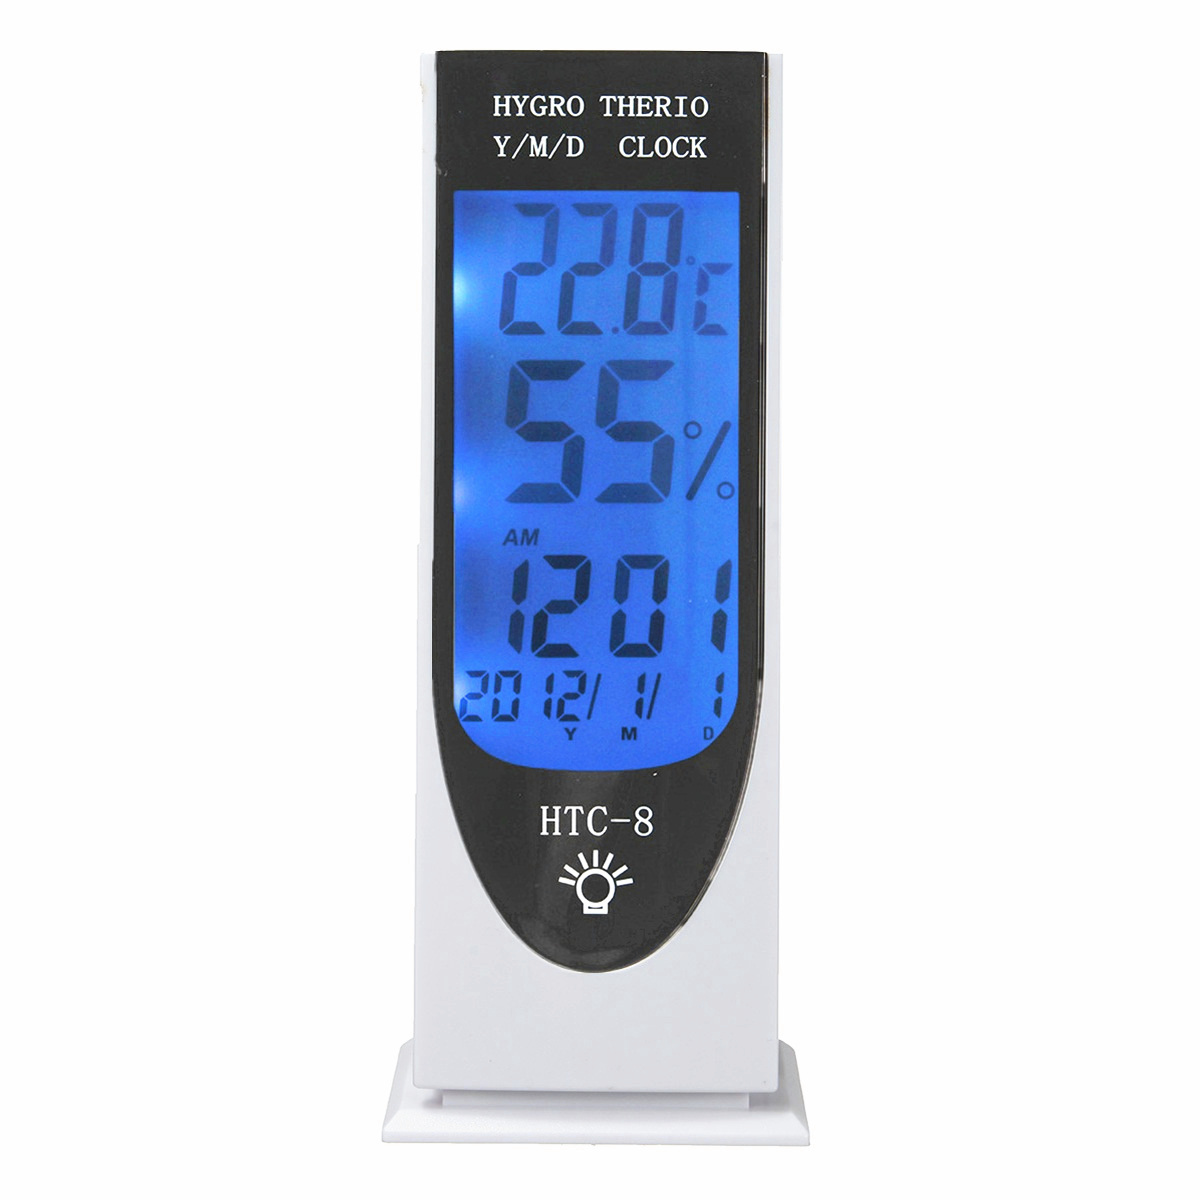 Digital-Large-LCD-Alarm-Clock-Thermometer-Calendar-Hygrometer-with-Night-Light-1132261